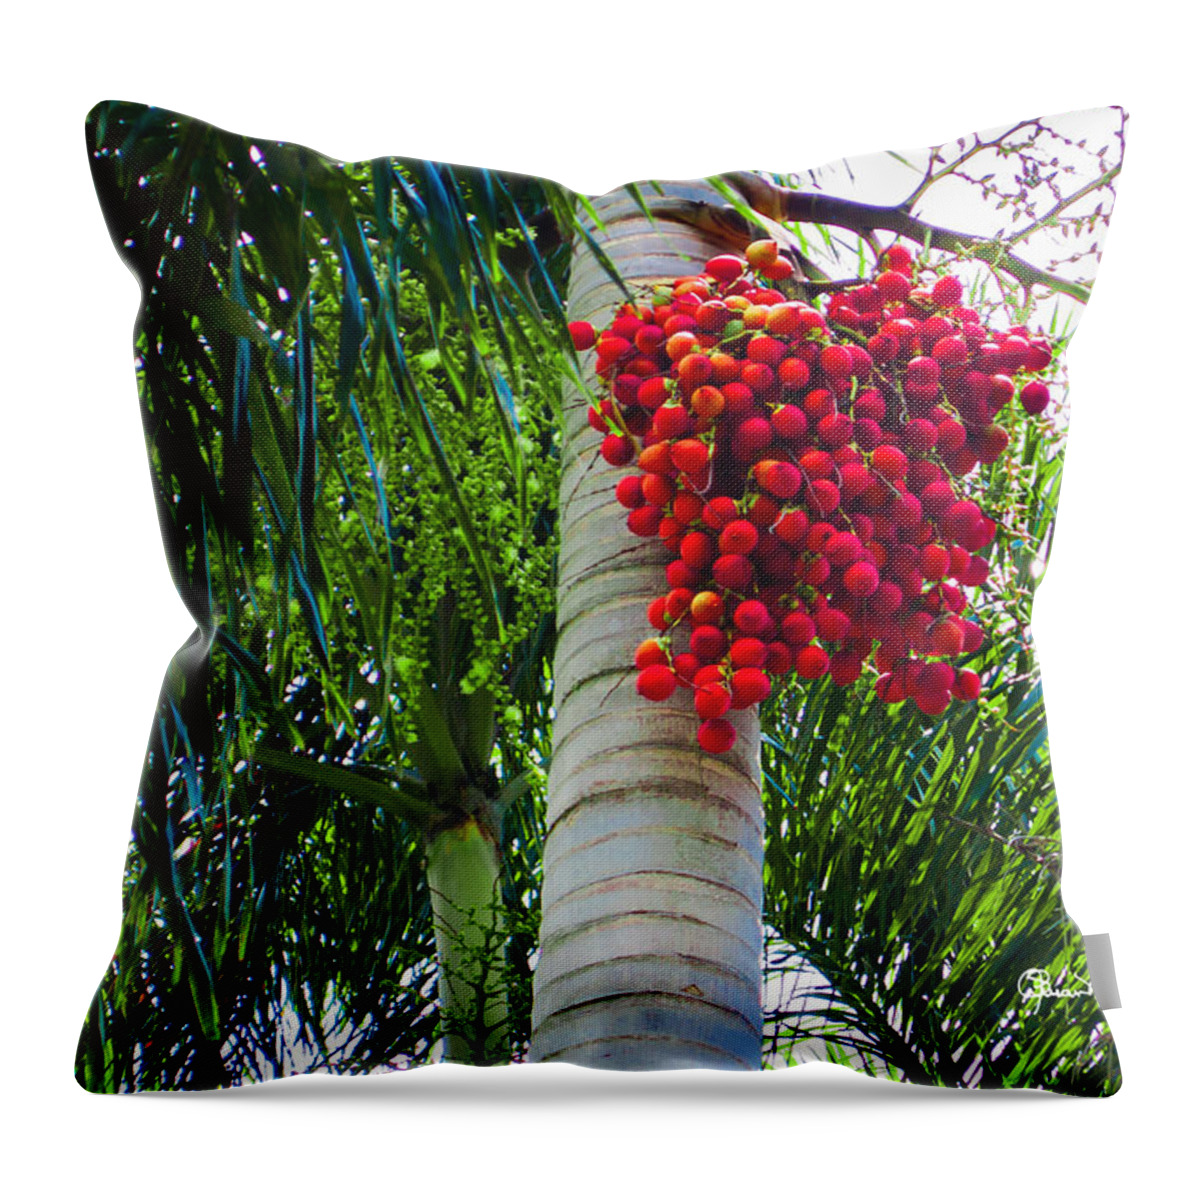 Susan Molnar Throw Pillow featuring the photograph Florida Style Ornaments by Susan Molnar